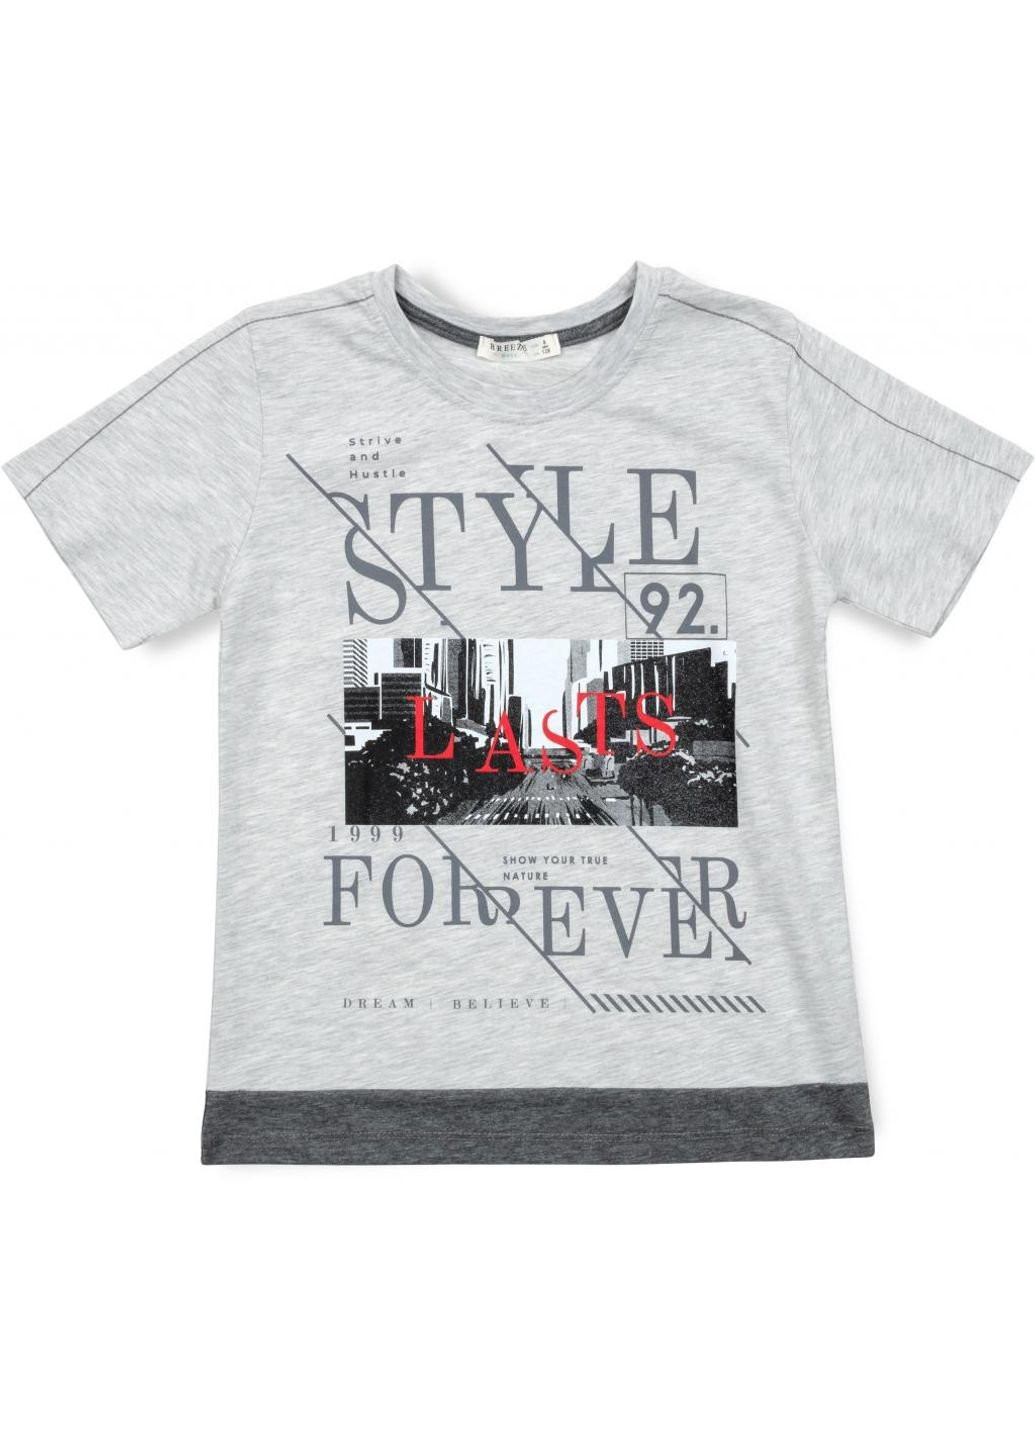 Сіра демісезонна футболка дитяча "style forever" (14535-128b-gray) Breeze